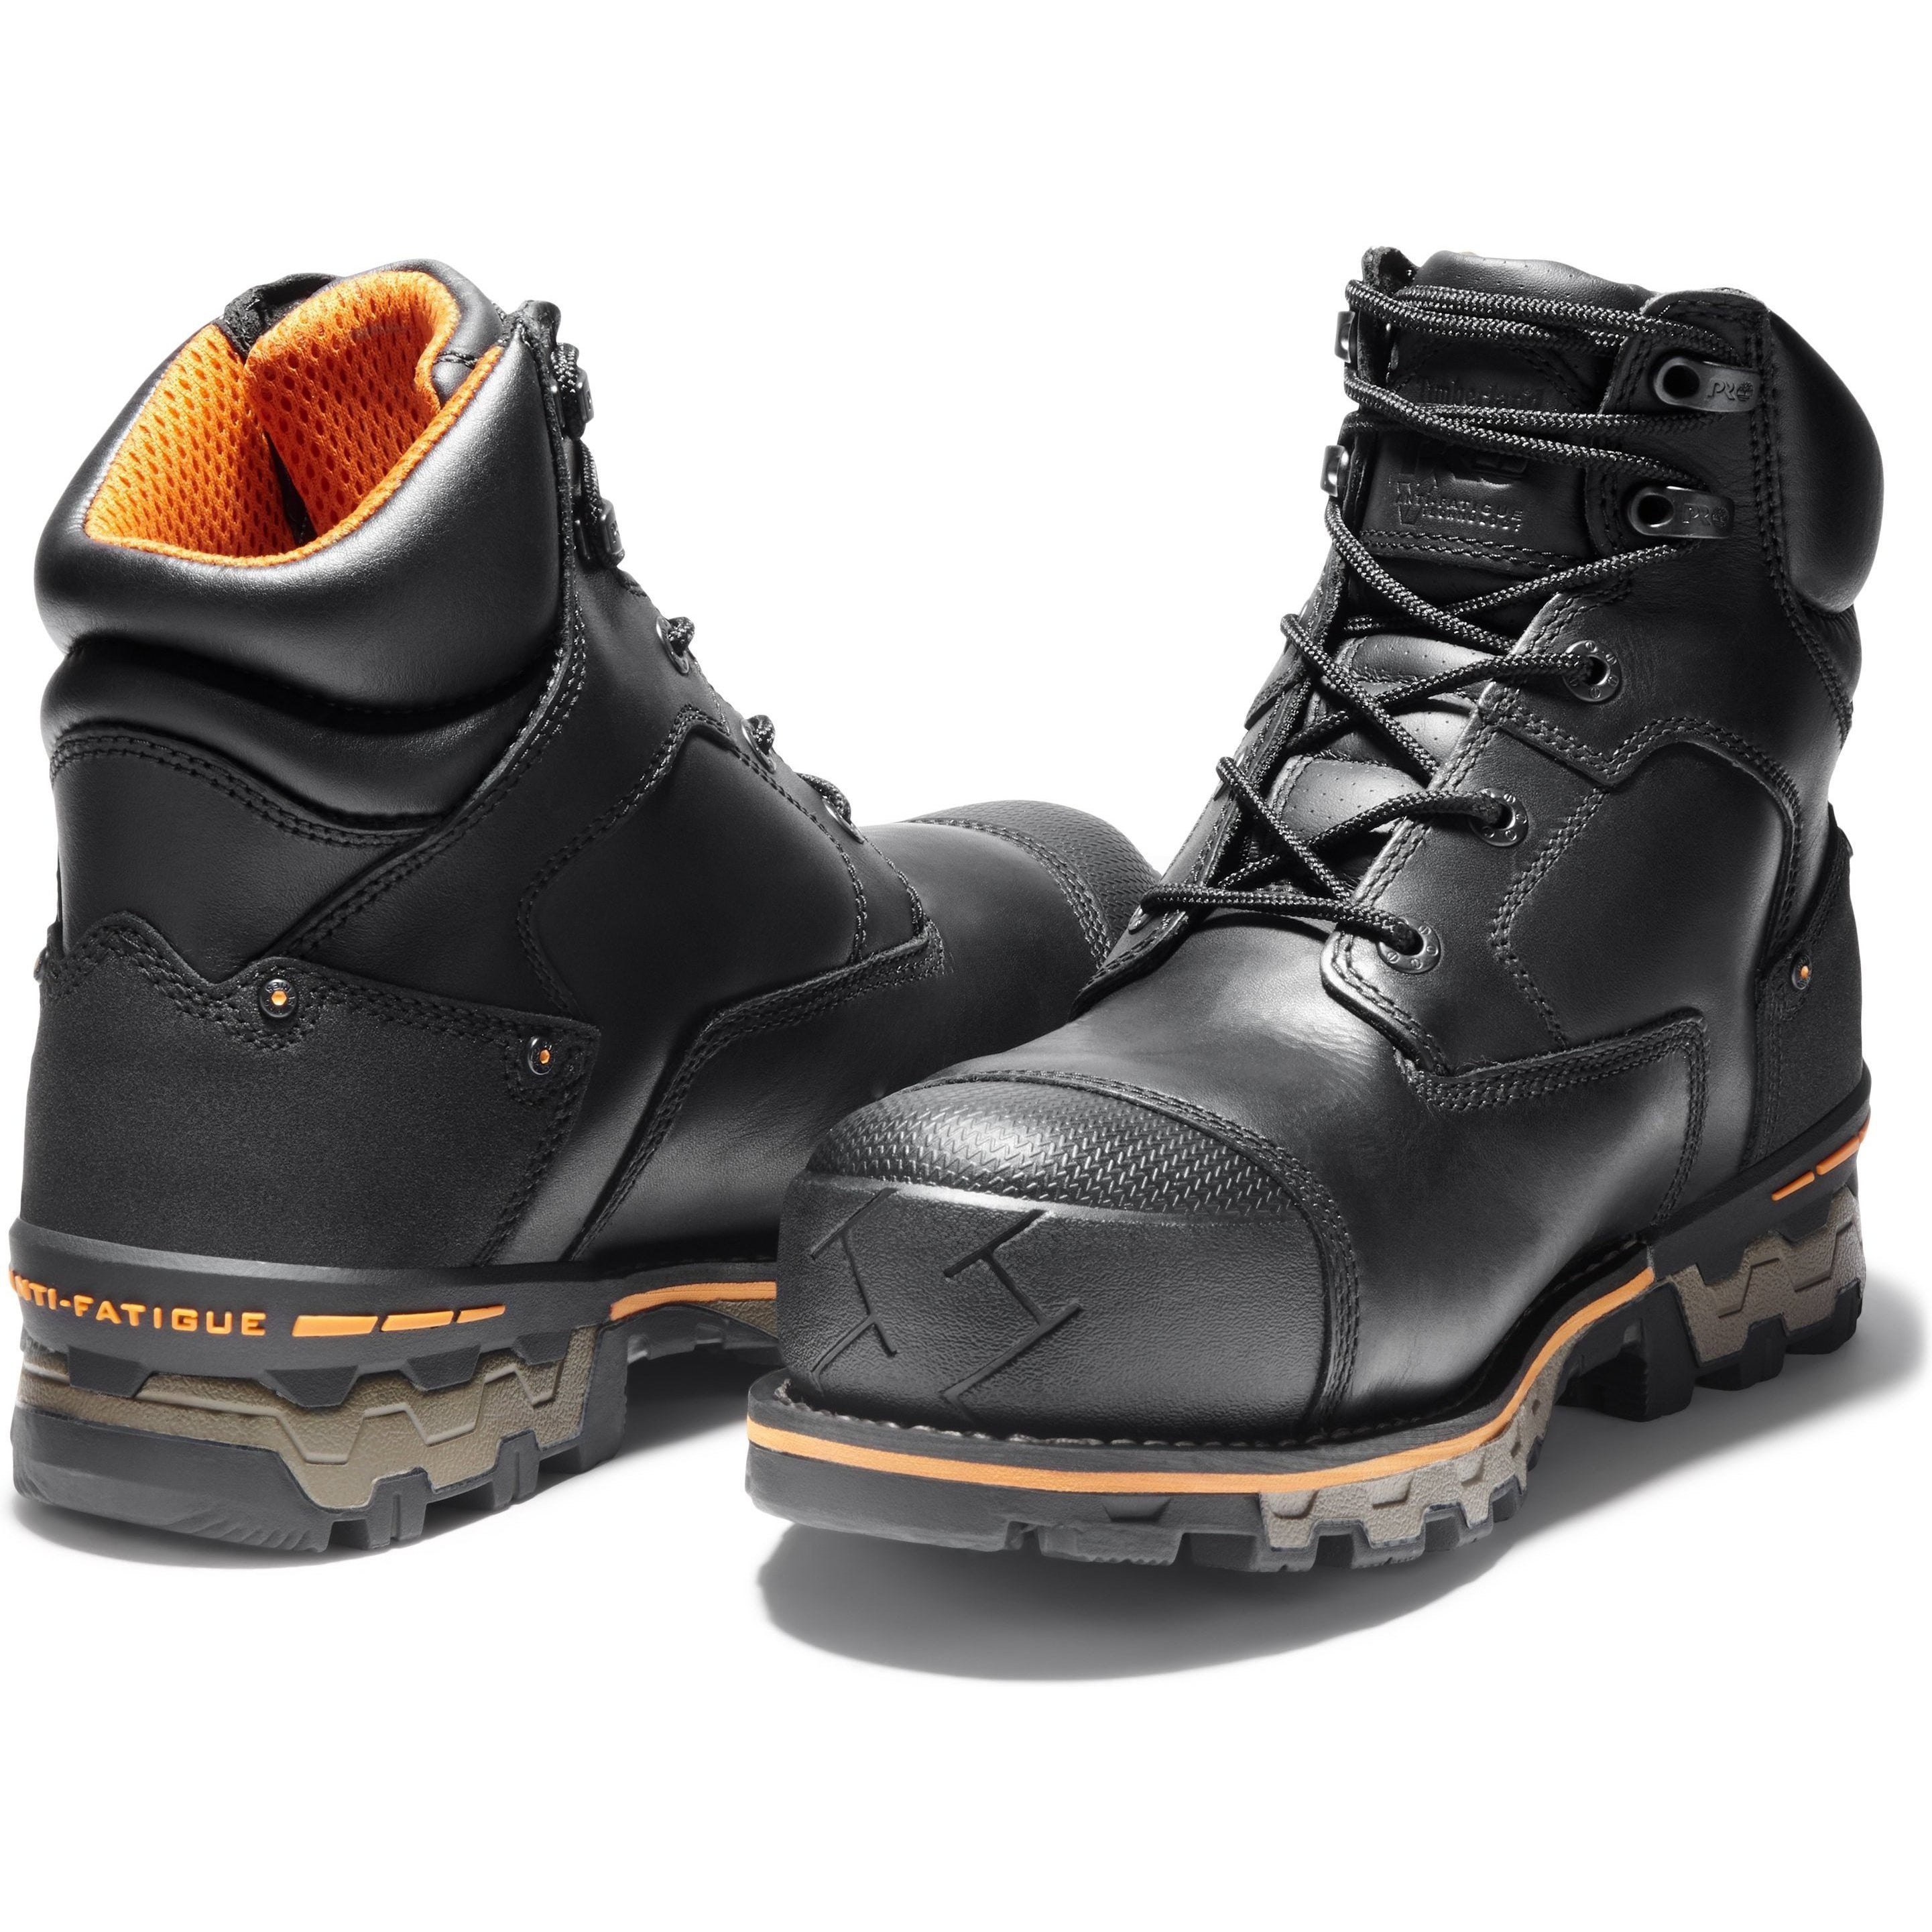 Timberland PRO Men's Boondock 6" Comp Toe WP Work Boot TB0A1FZP001  - Overlook Boots